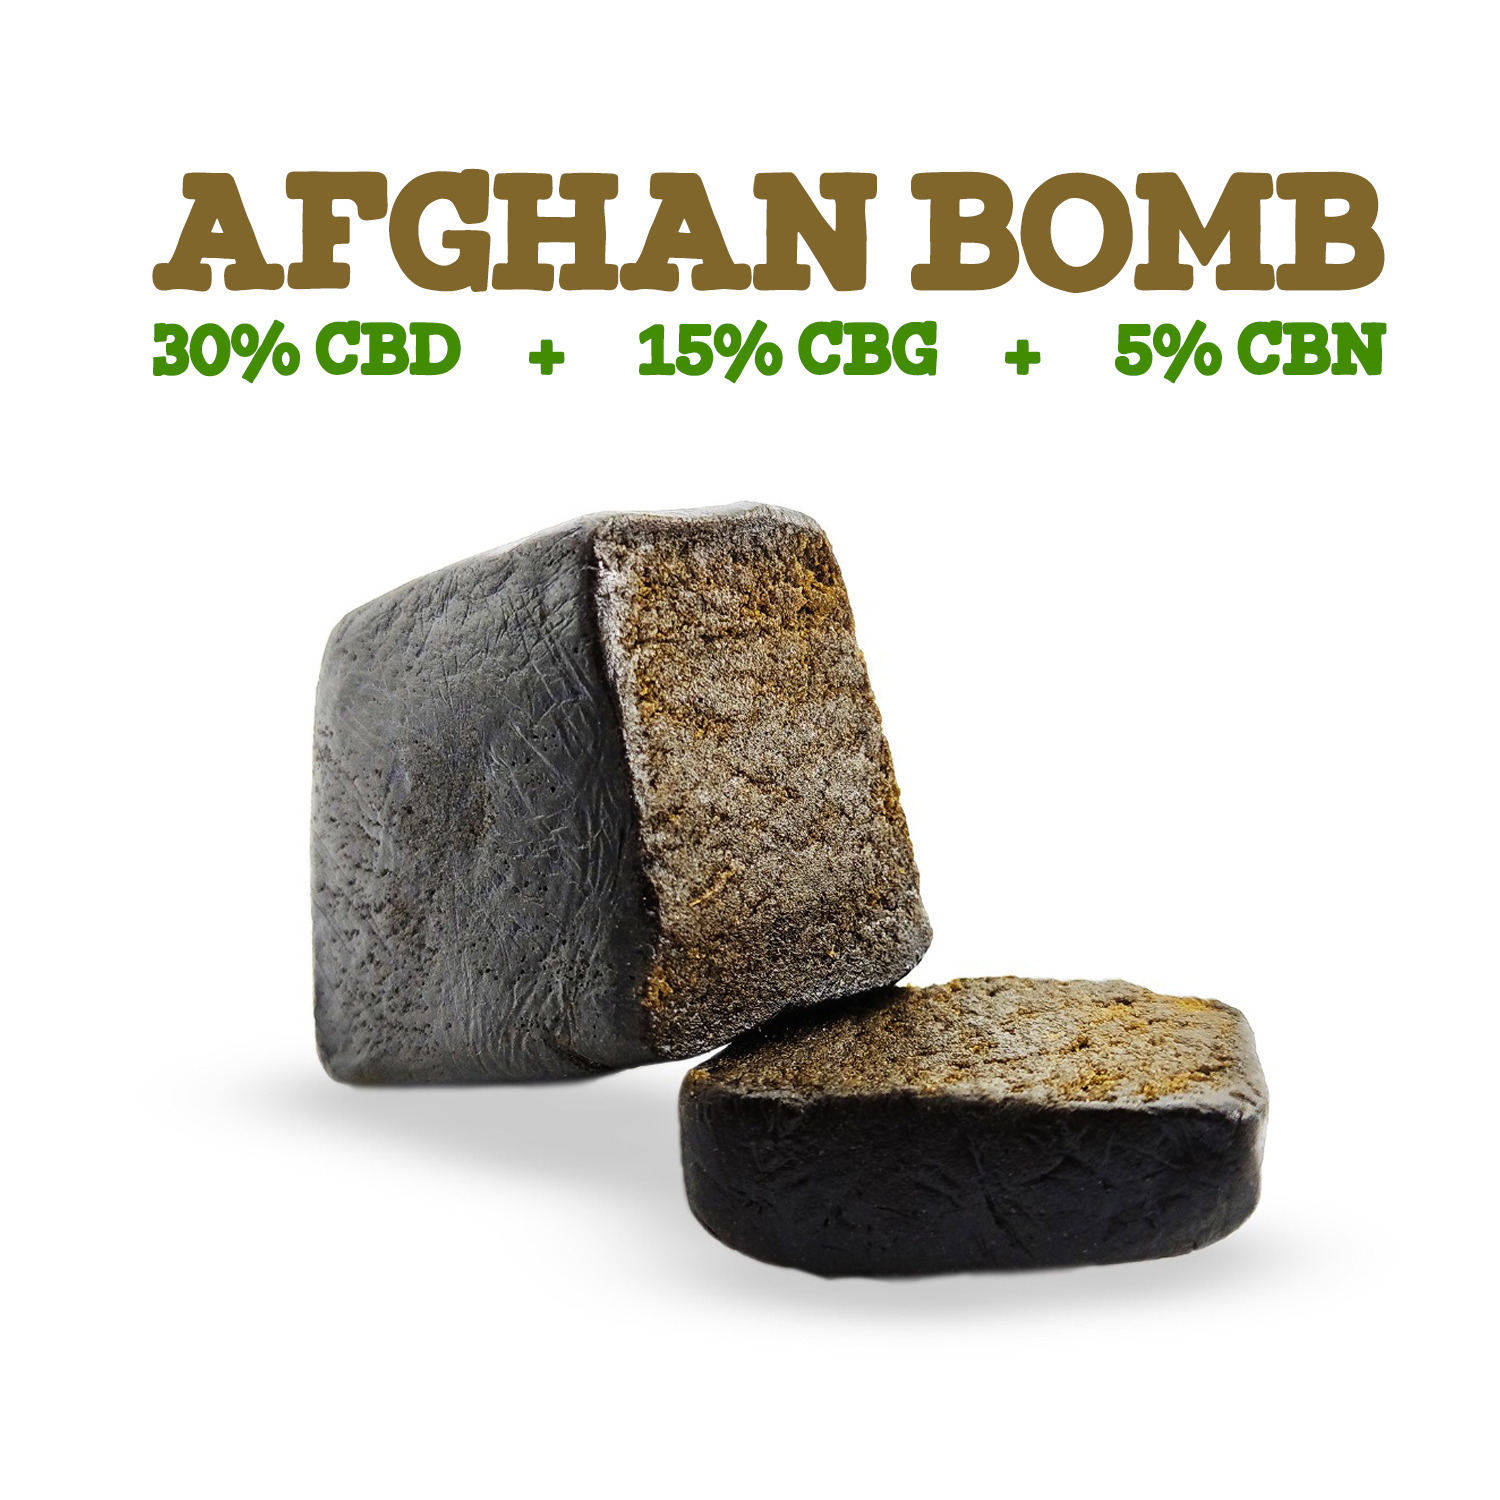 AFGHAN BOMB 30% CBD + 15% CBG + 5% CBN